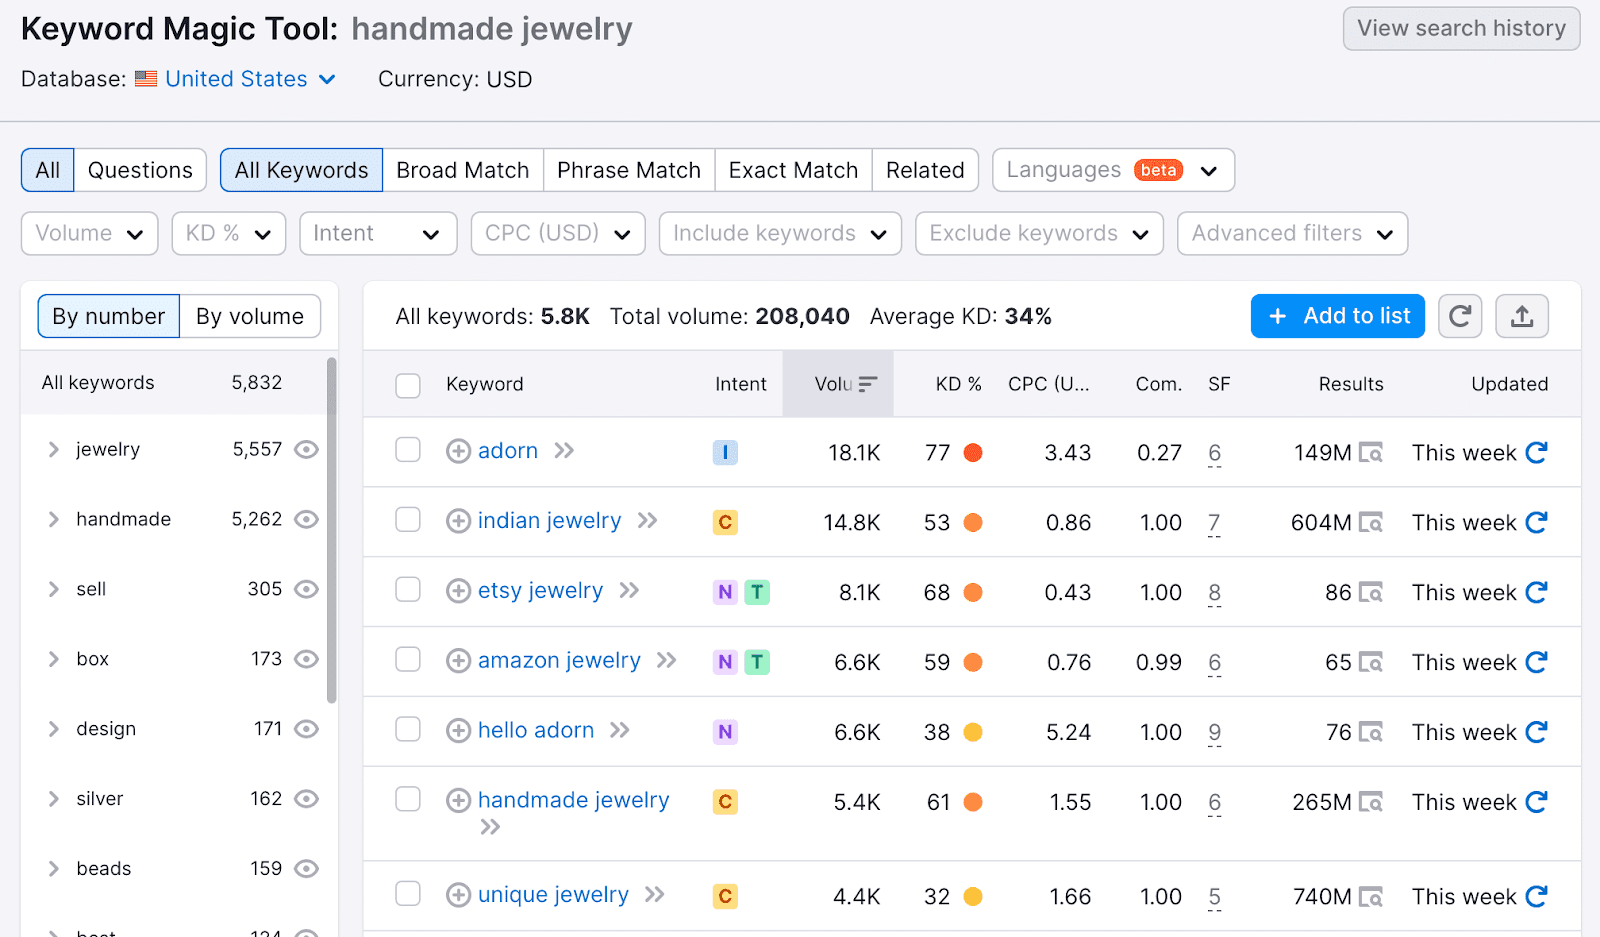 Keyword Magic Tool results for "handmade jewelry"